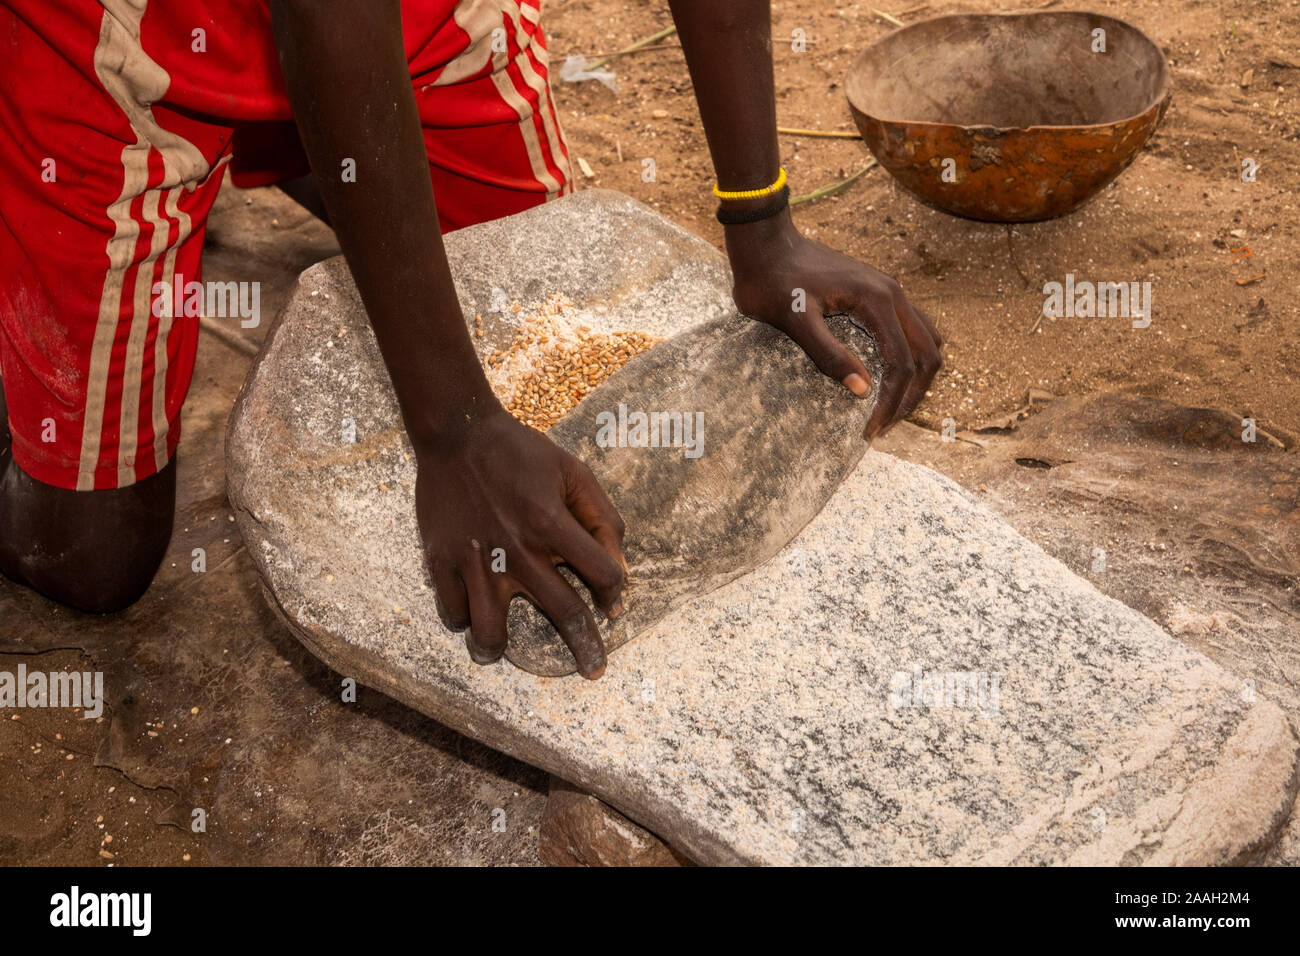 Ethiopia, South Omo, Kolcho village, hands of young girl grinding grain on stone to make flour Stock Photo